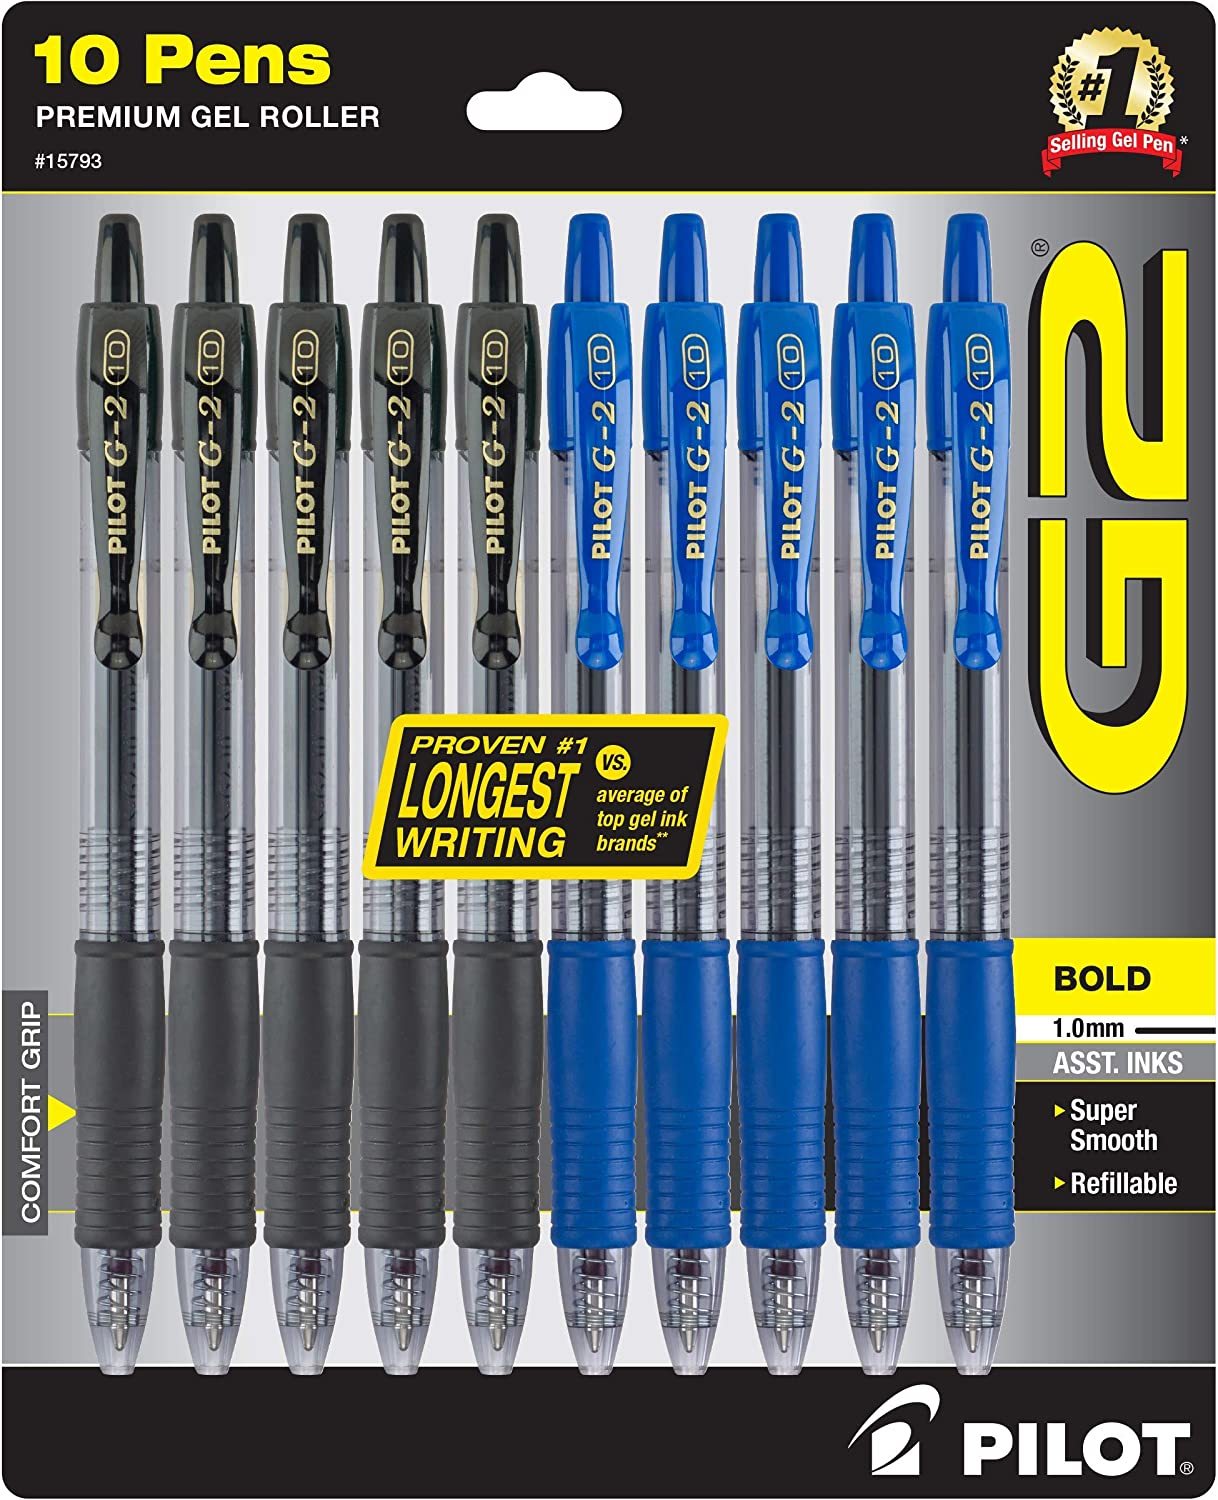  Bazic White-Out Correction Pens 9 mL/Pen 2 Pens/Pack